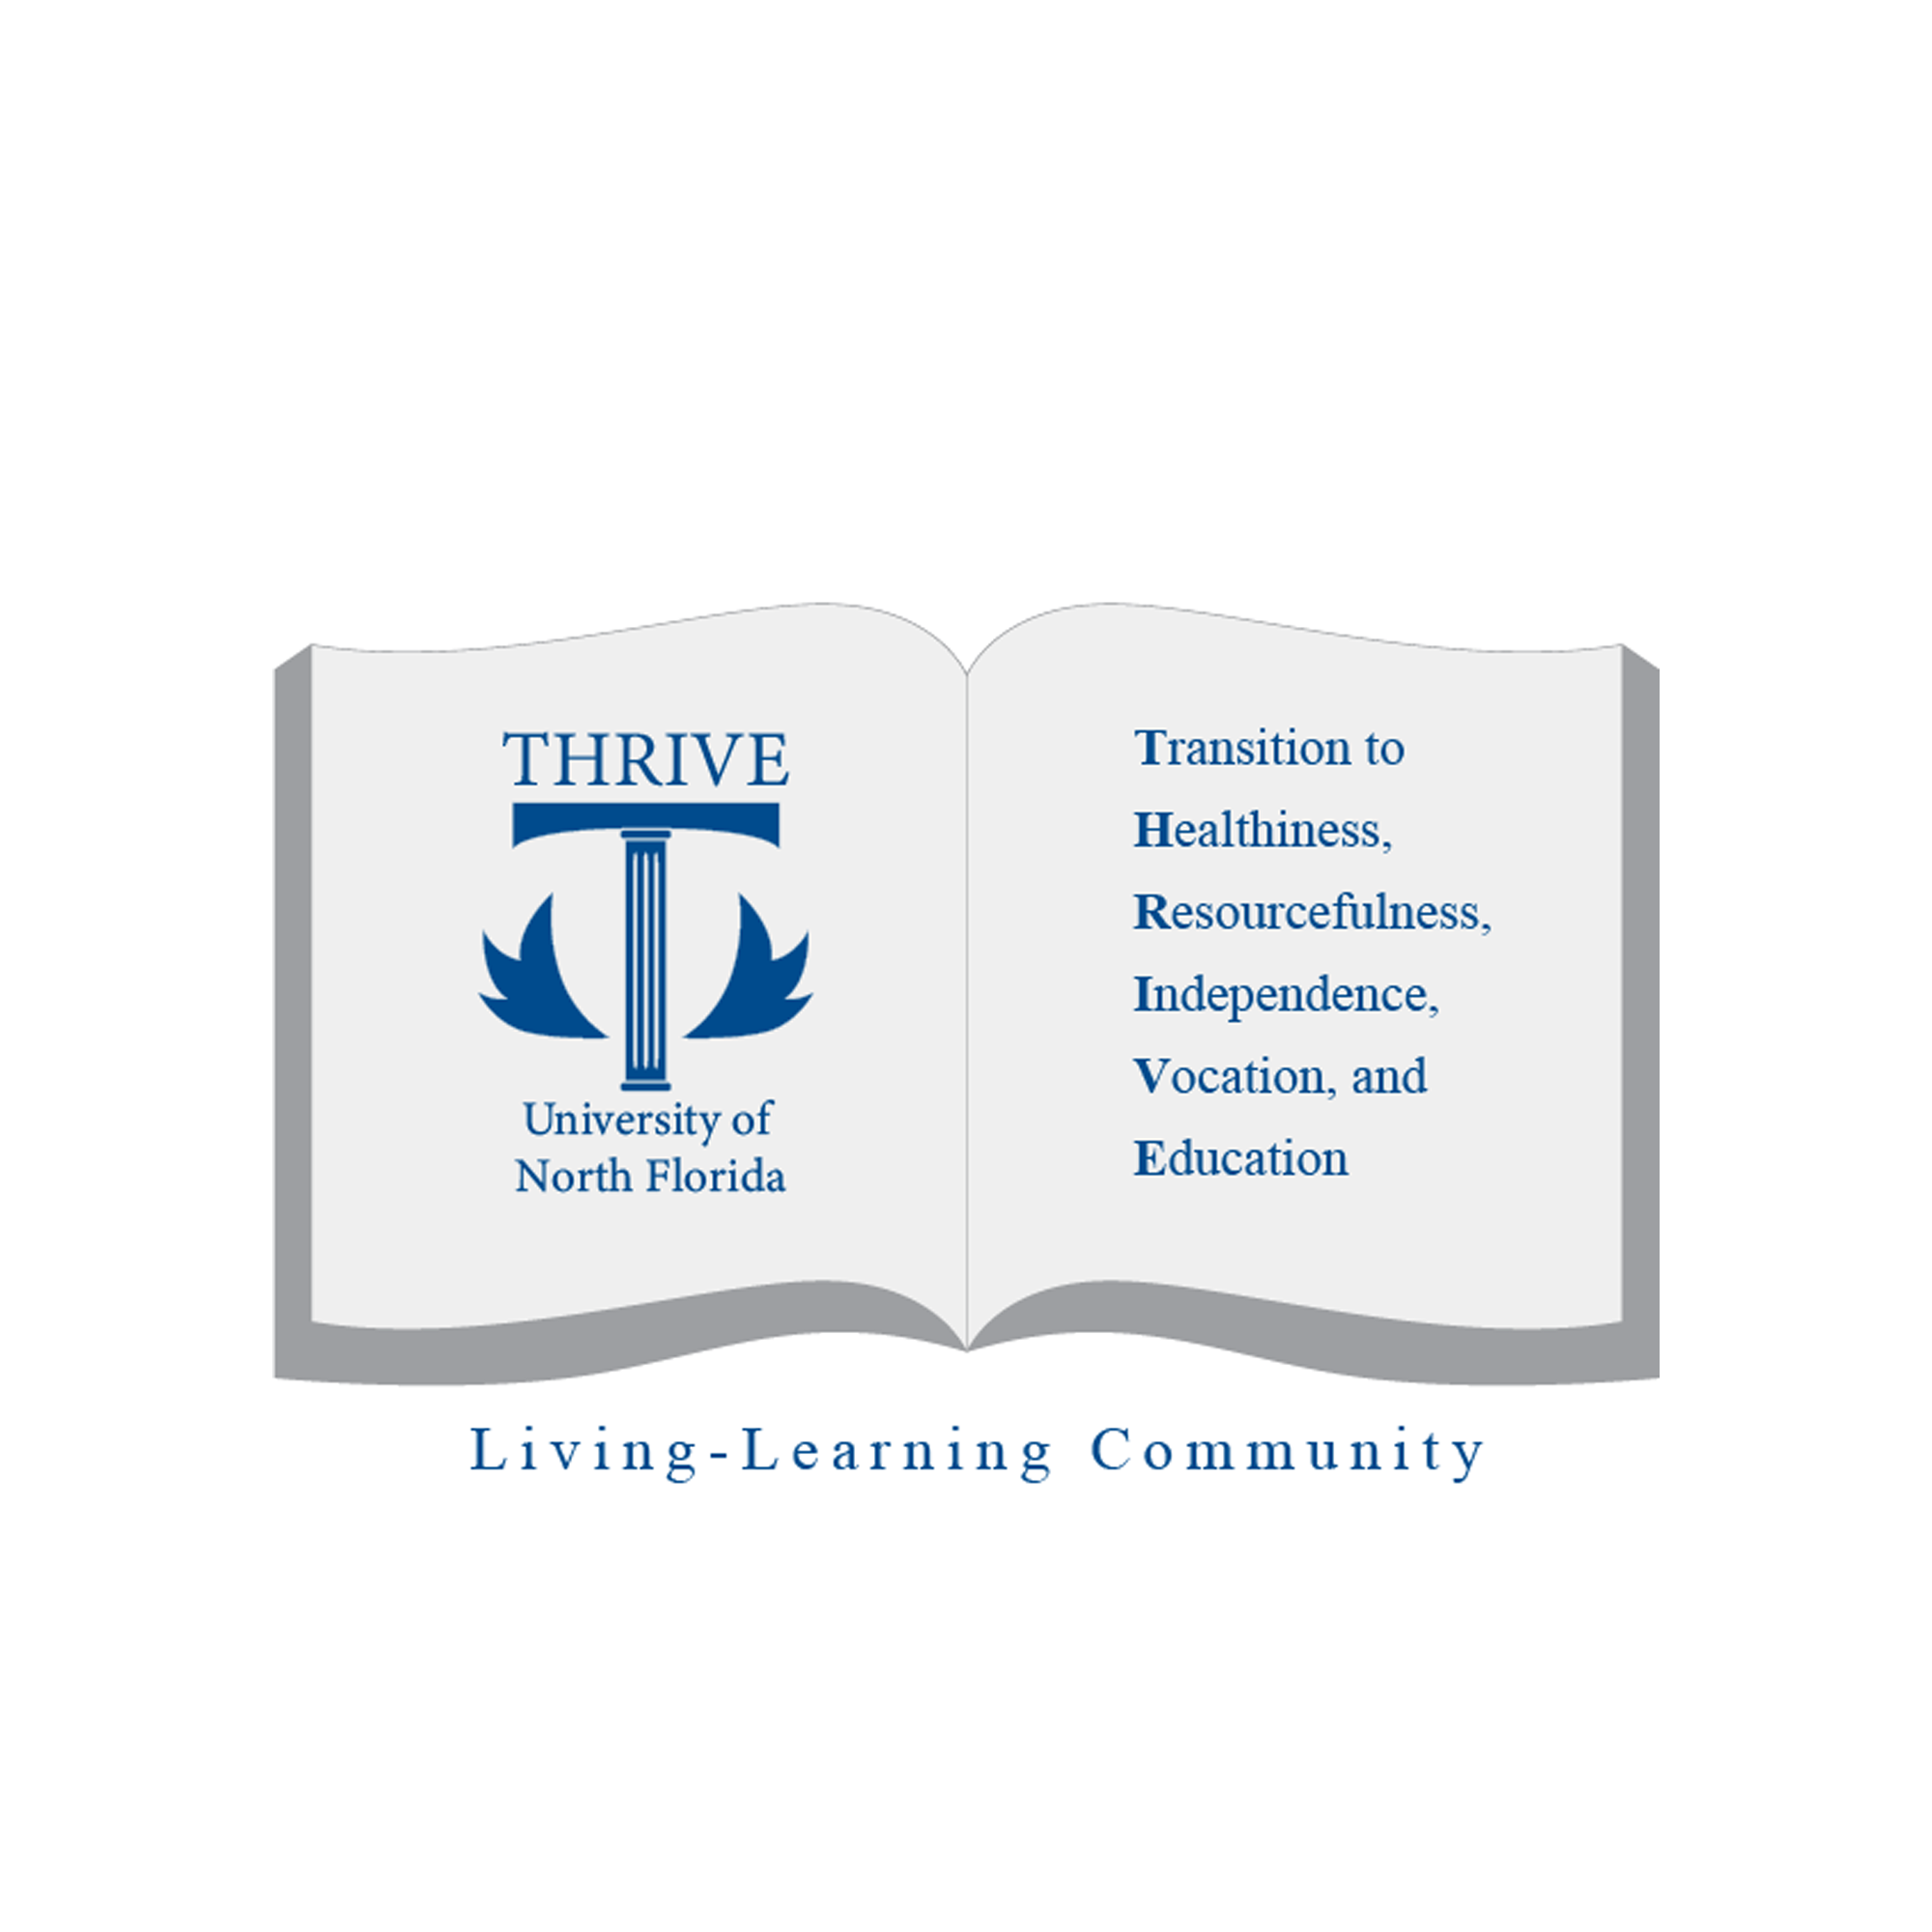 thrive living-learning community logo